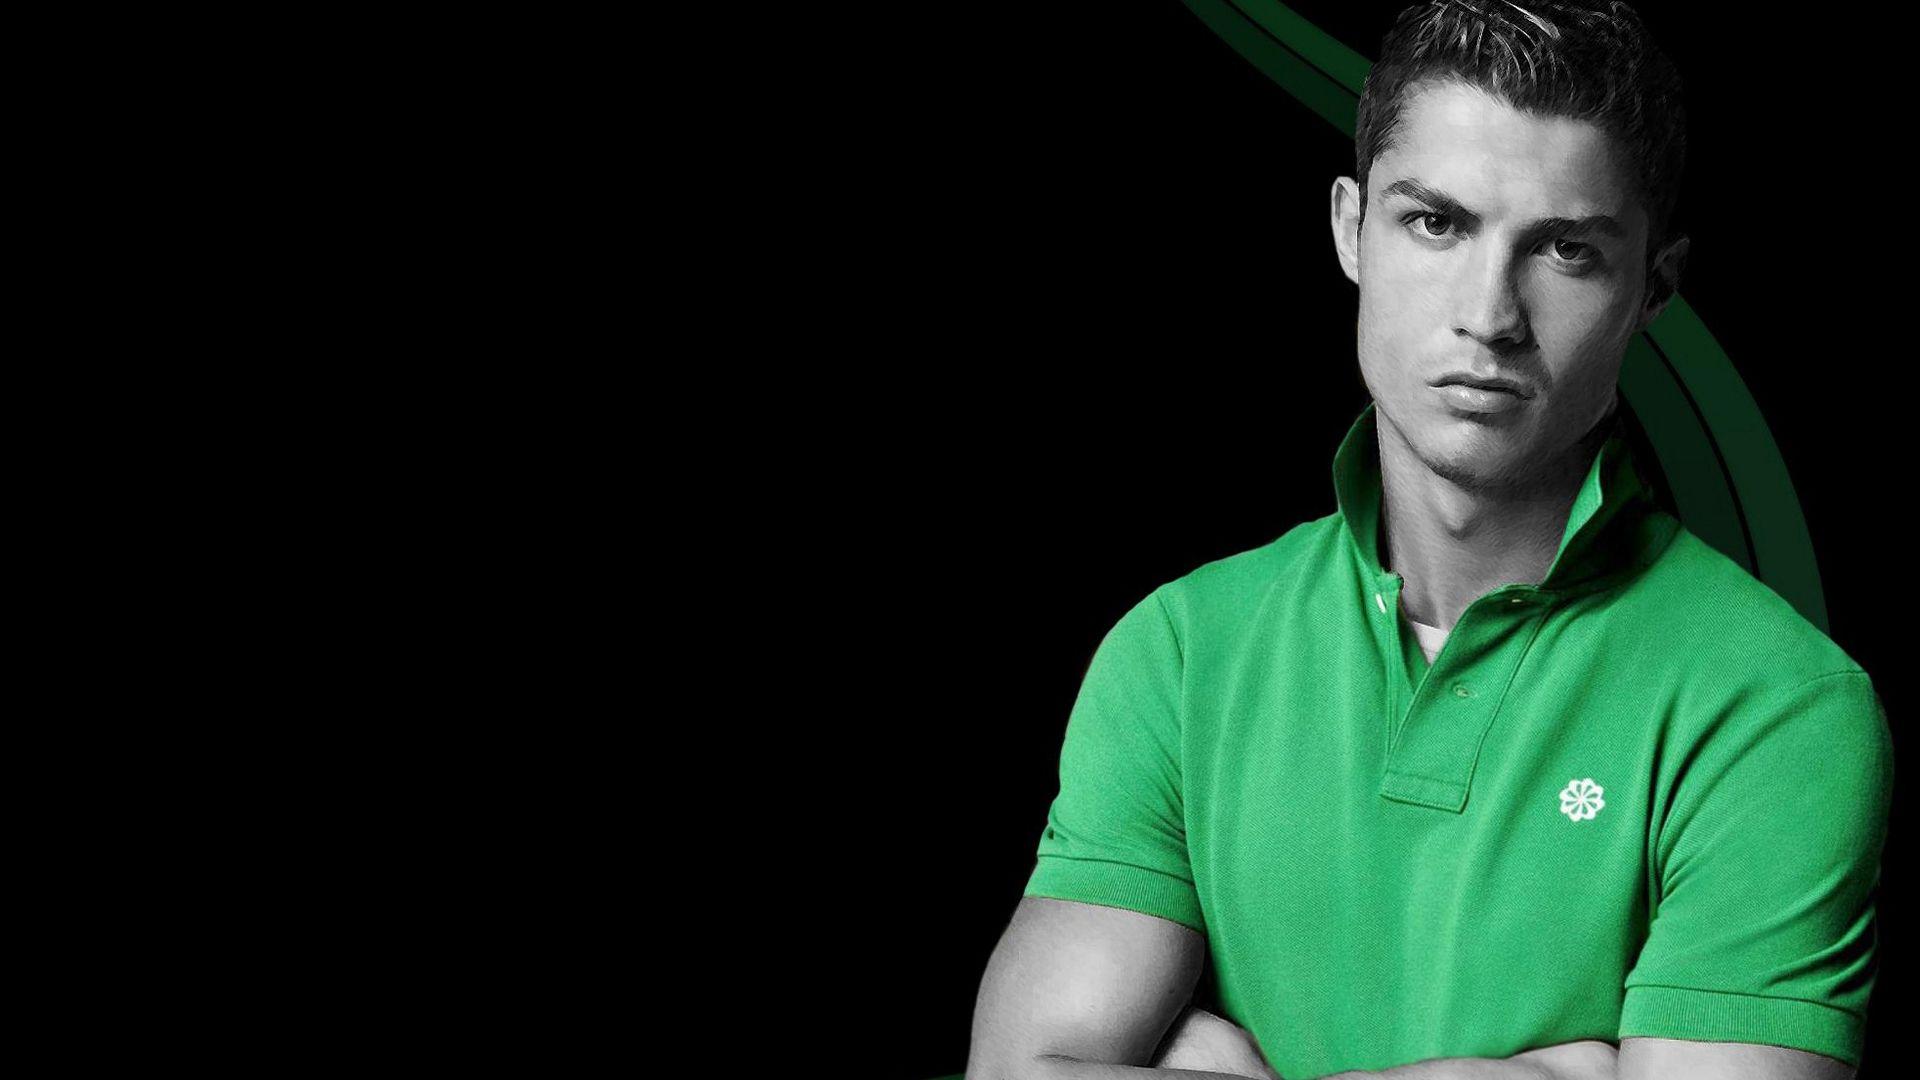 Cristiano Ronaldo HD Wallpaper Full Size Desktop Image For Androids